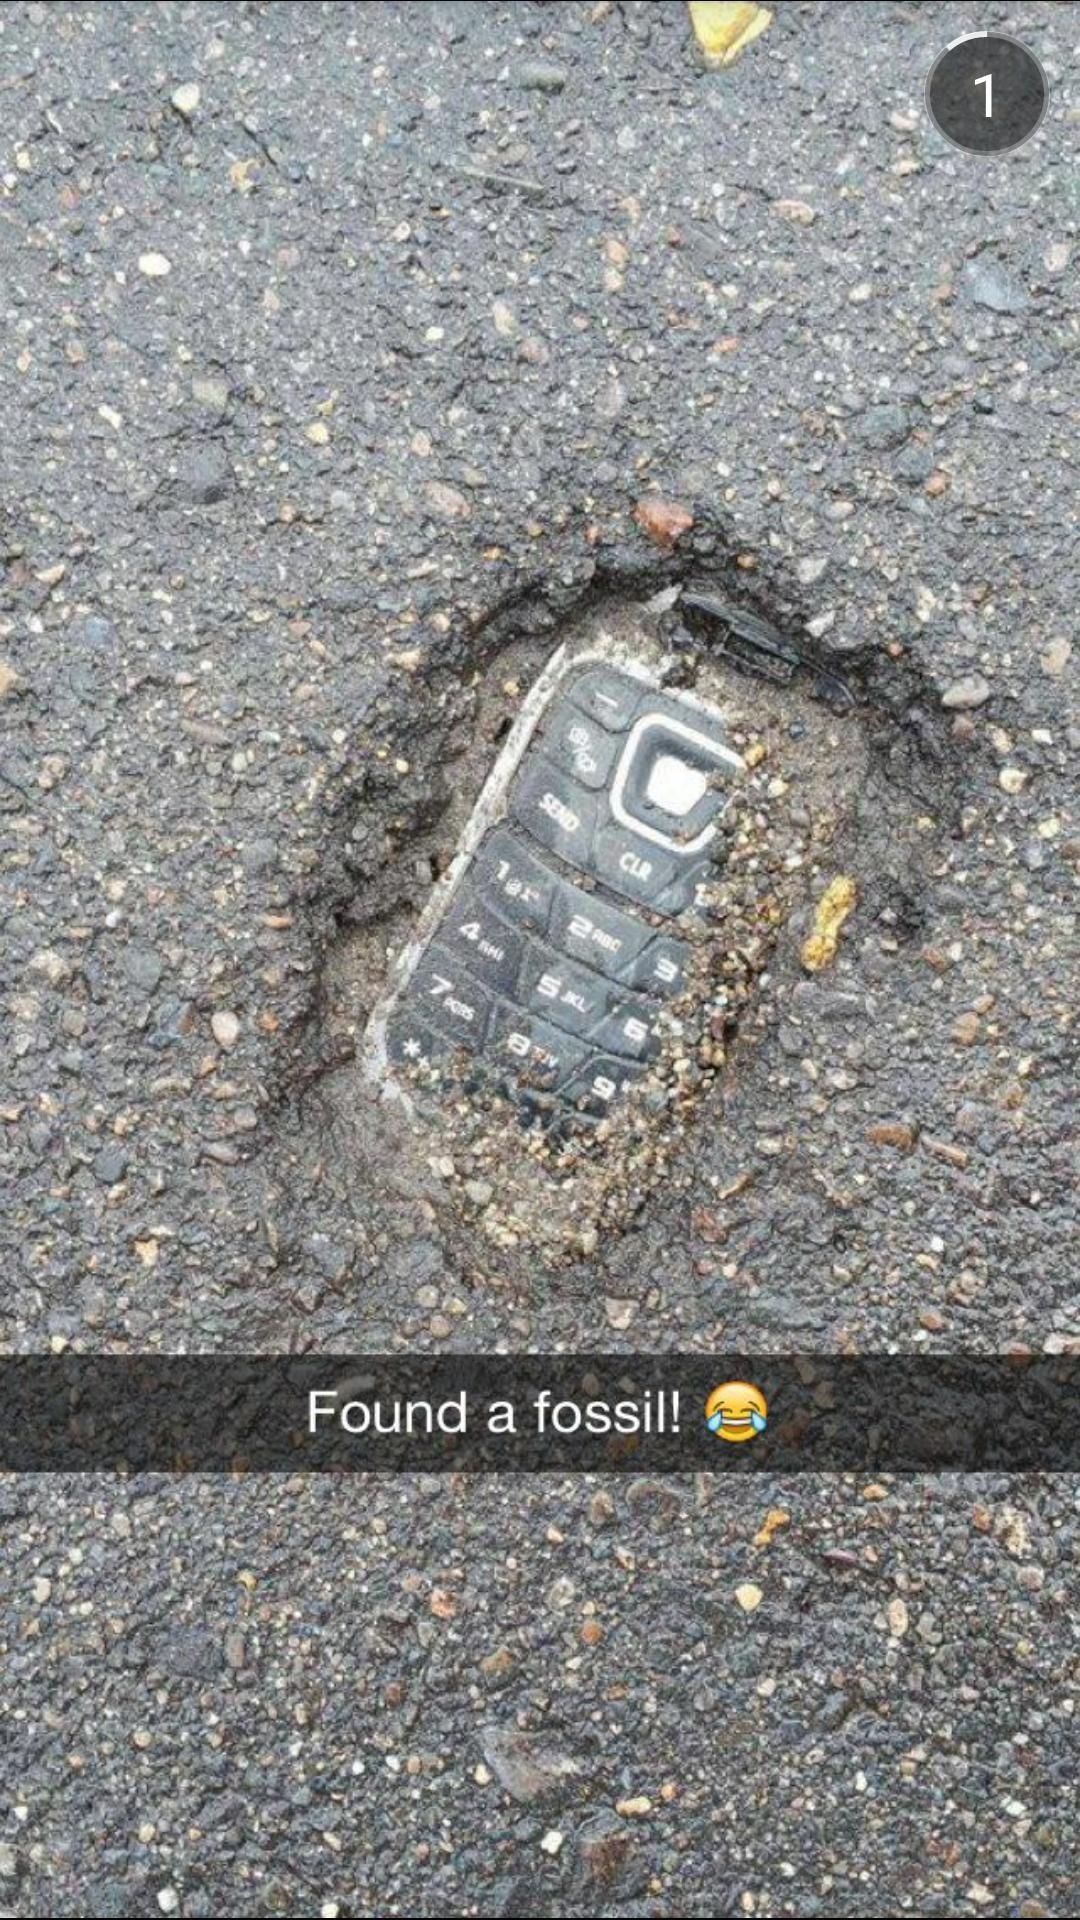 An interesting fossil